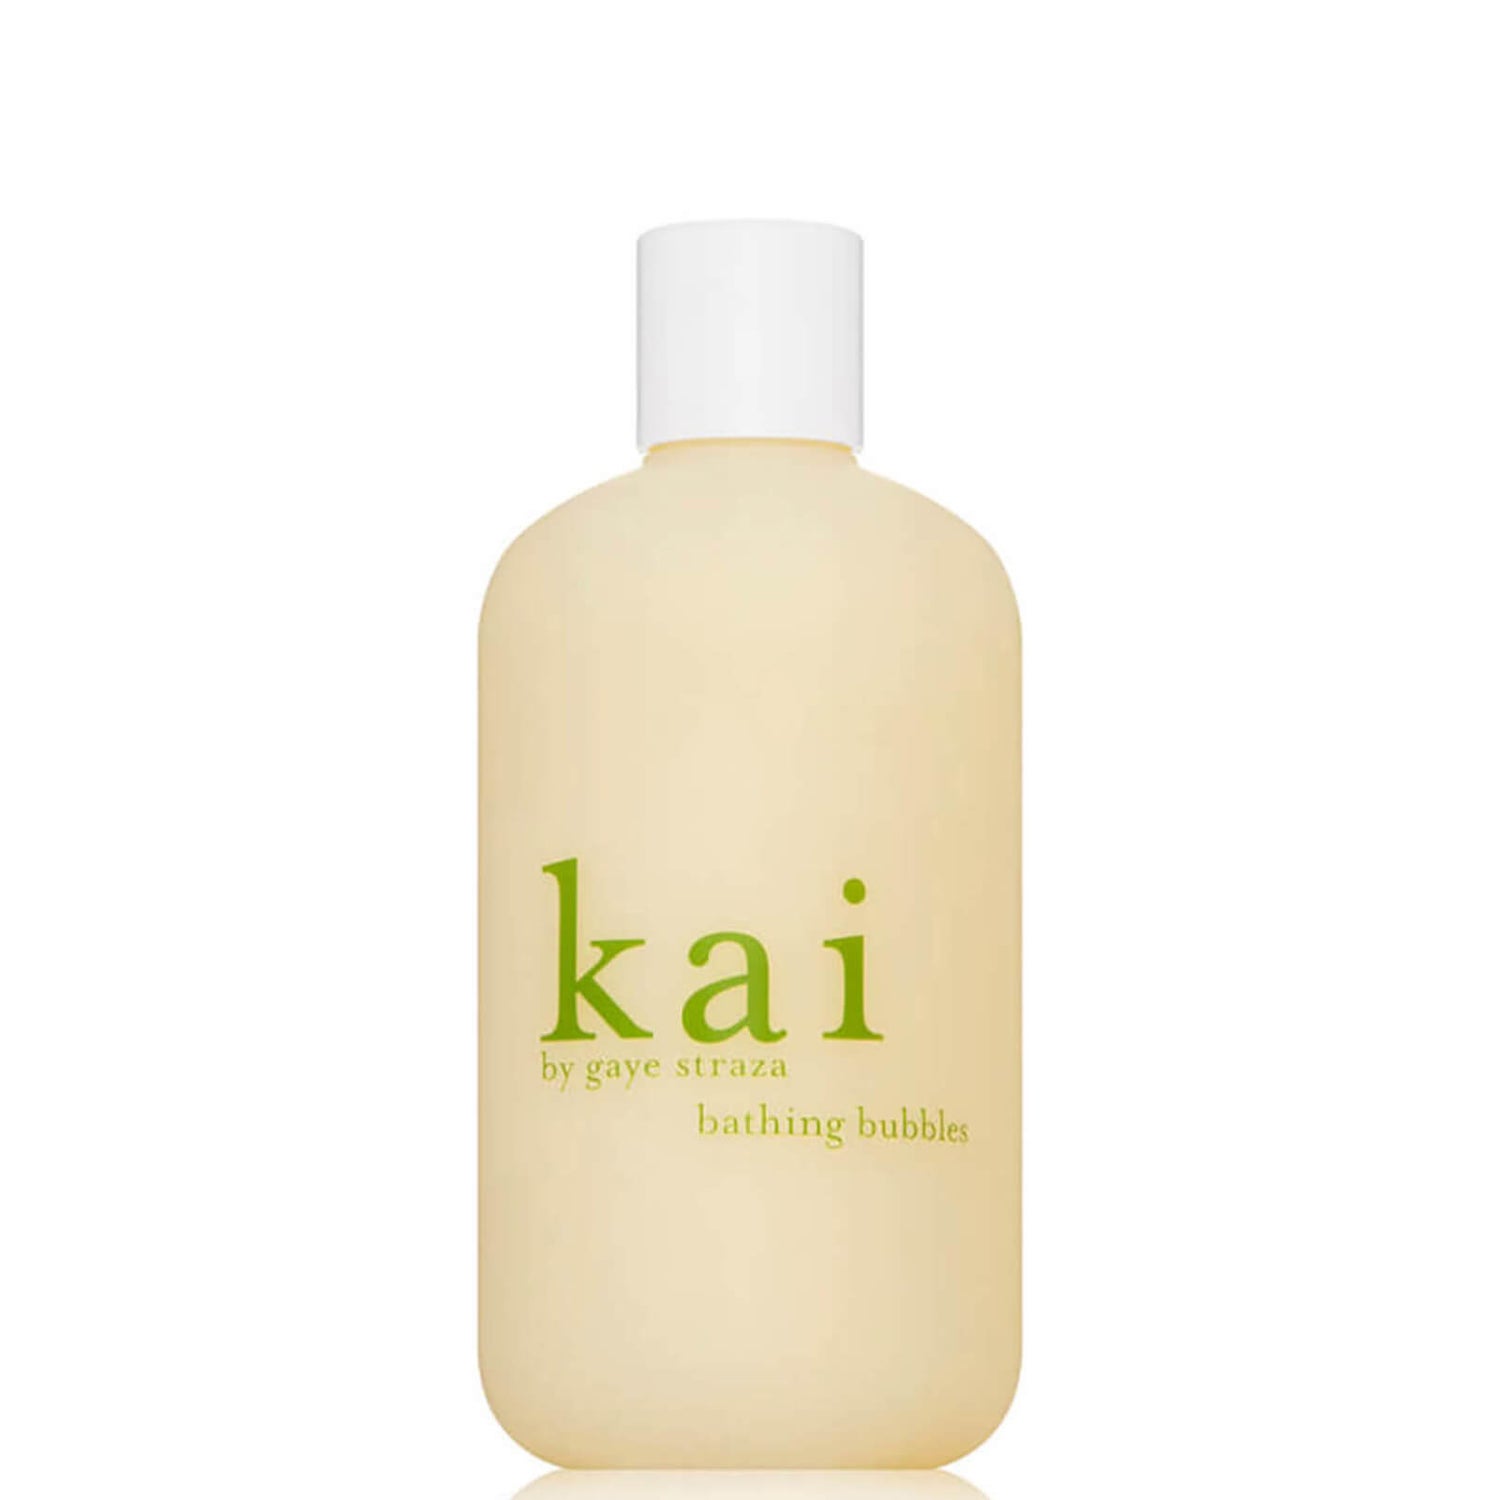 kai Bathing Bubbles (12 oz.)